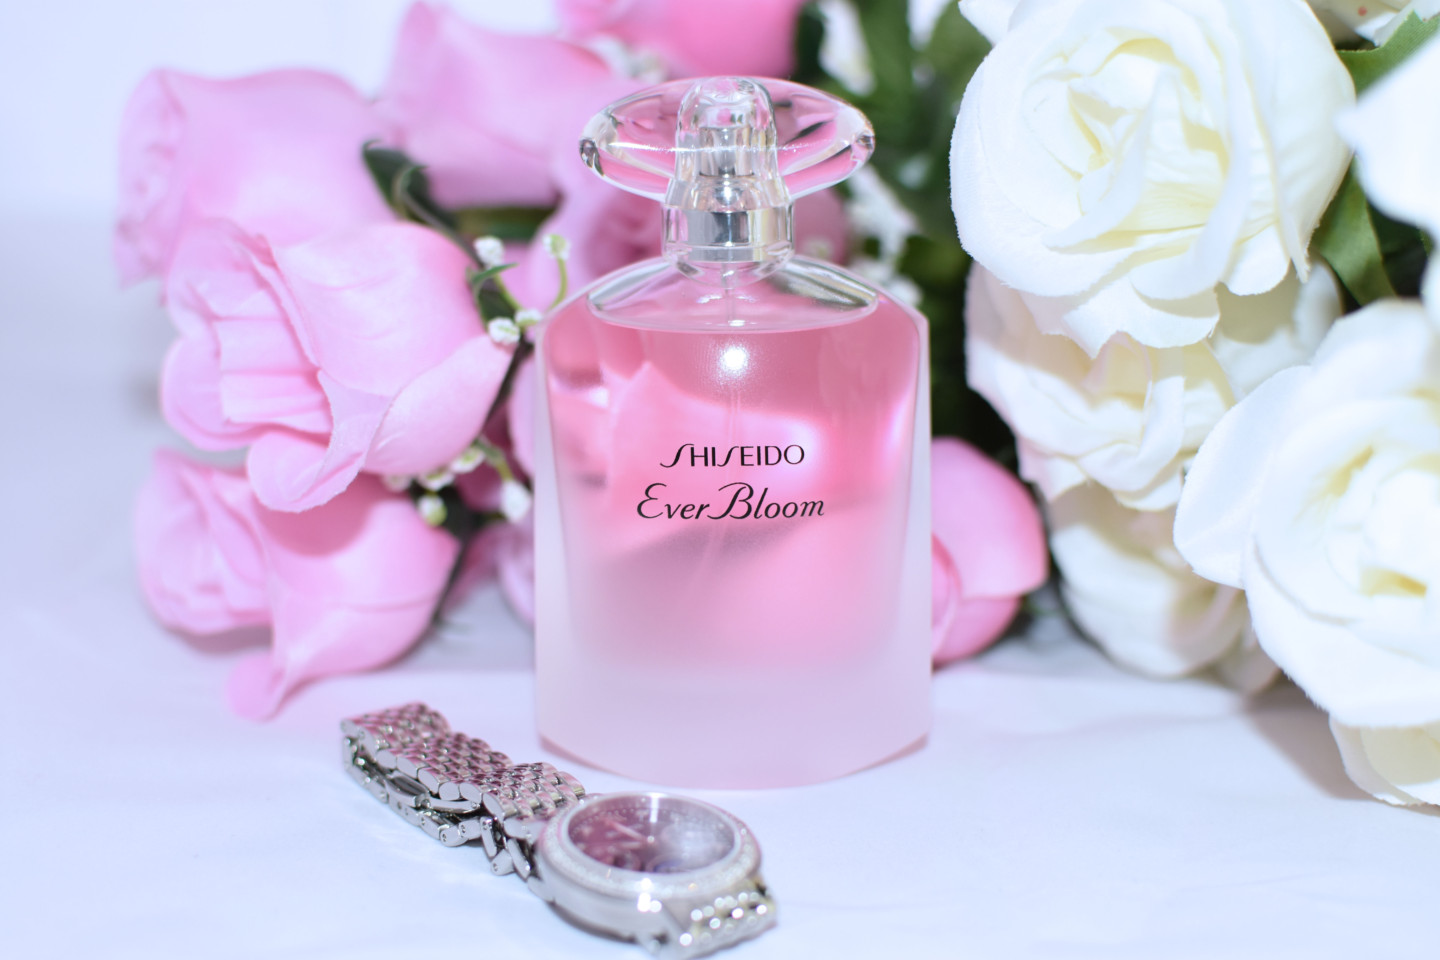 Shiseido-profumo-Ever-Bloom-valentina-coco-beauty-luxury